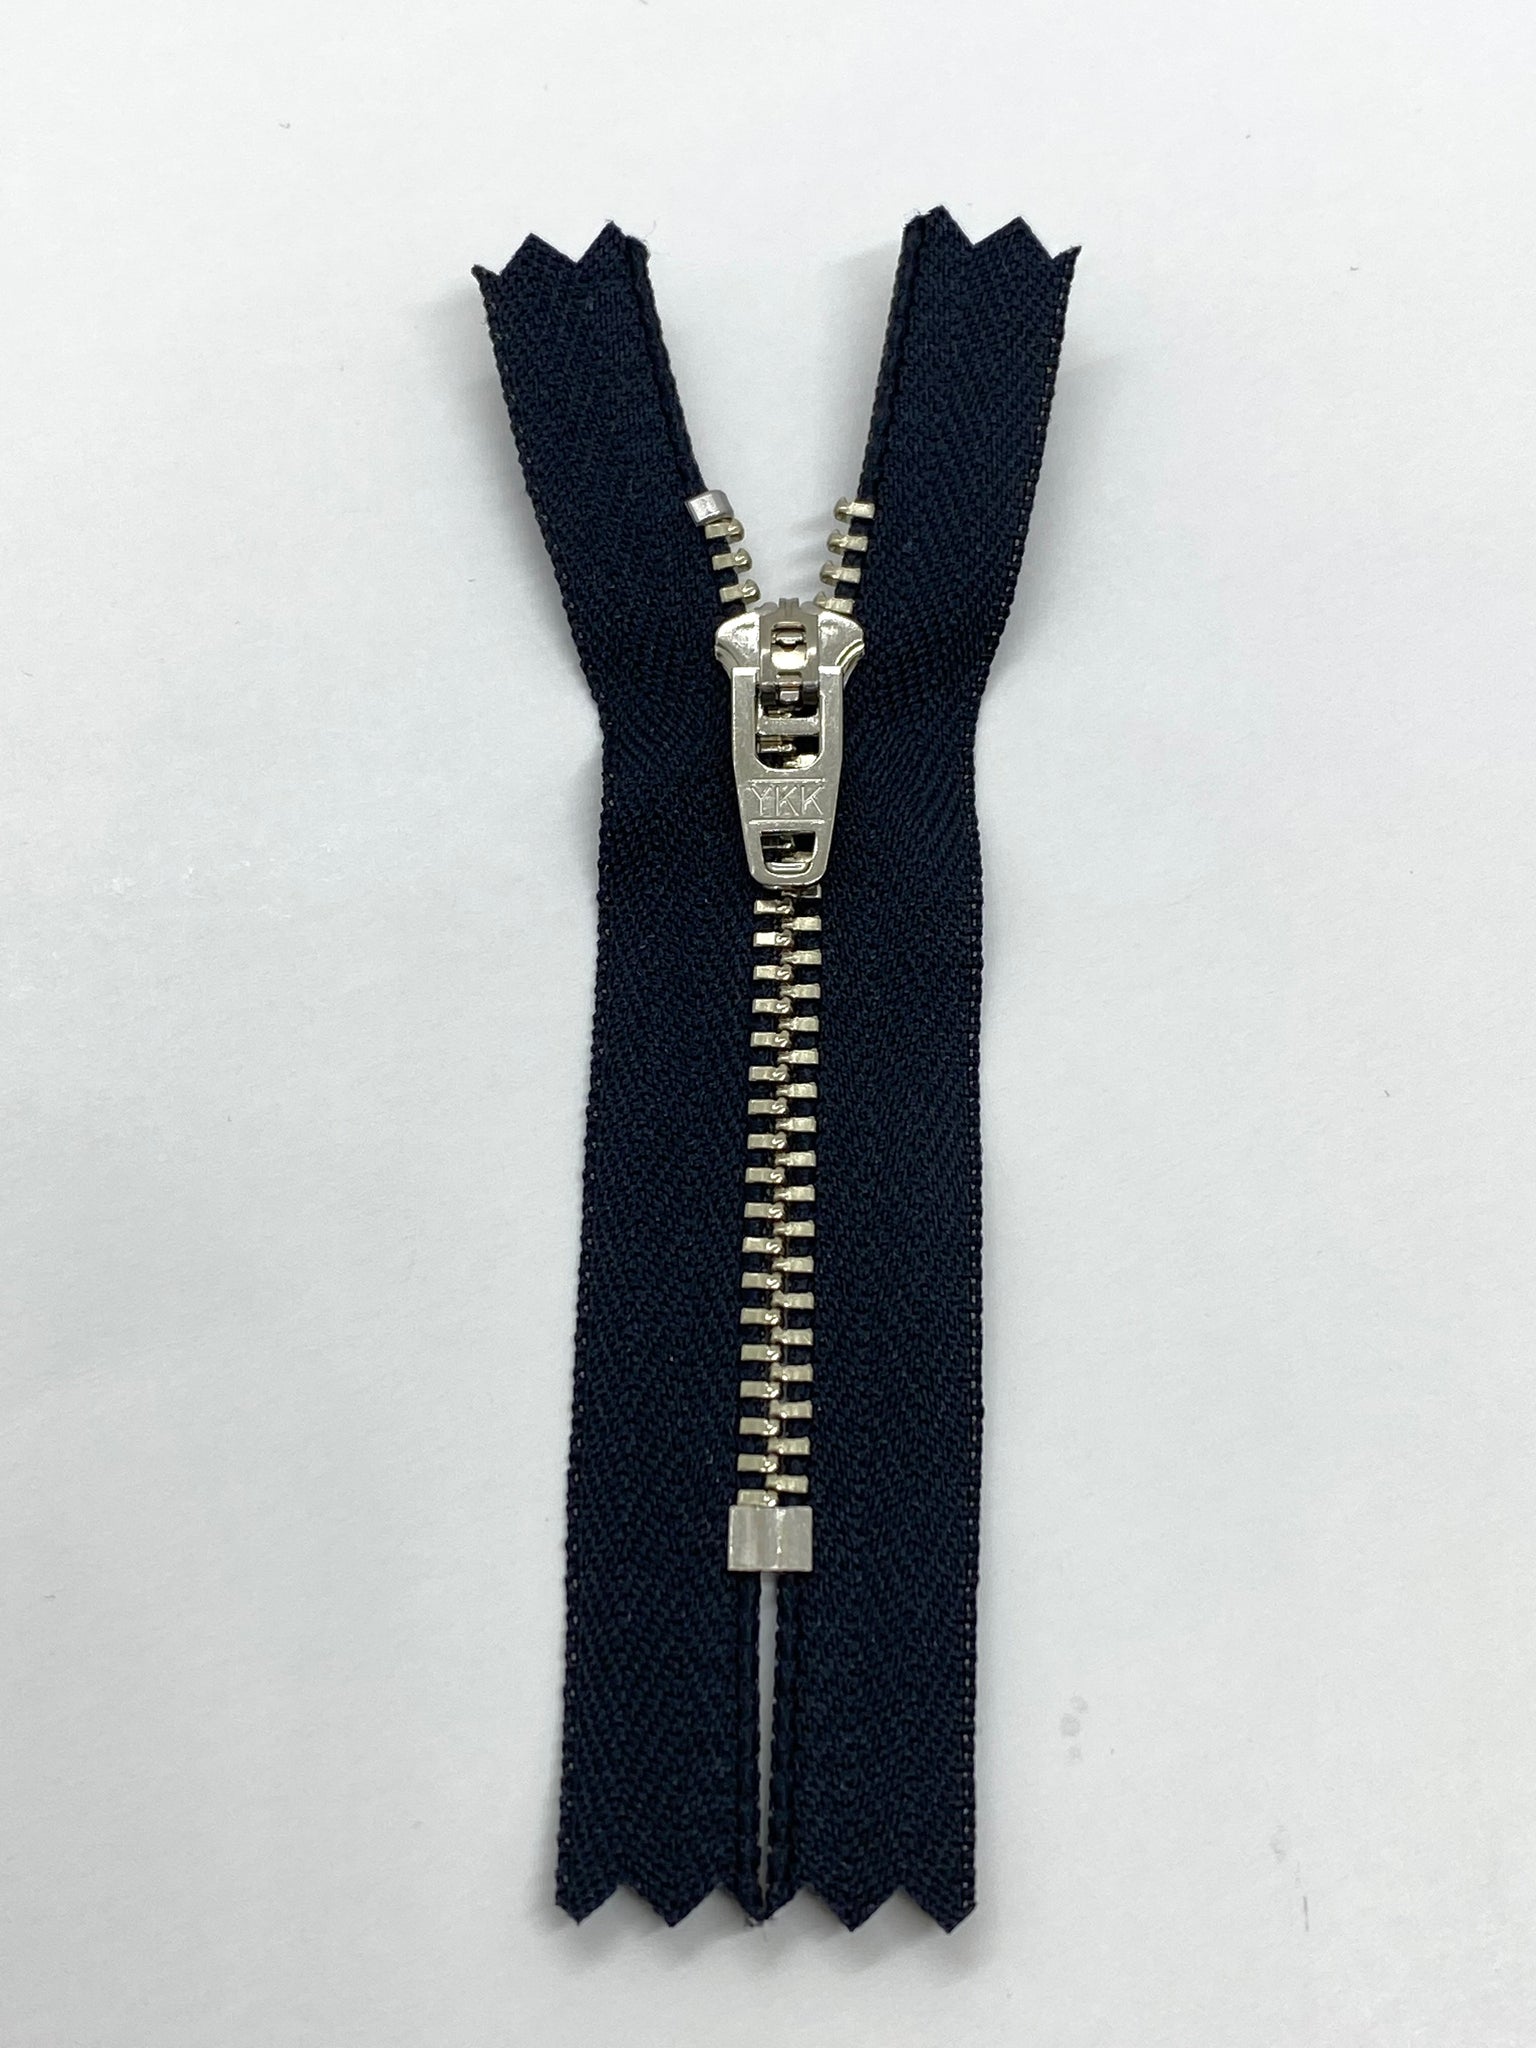 YKK #3 Coil Zipper, 7 inch length, Black 580 (100 Pack)